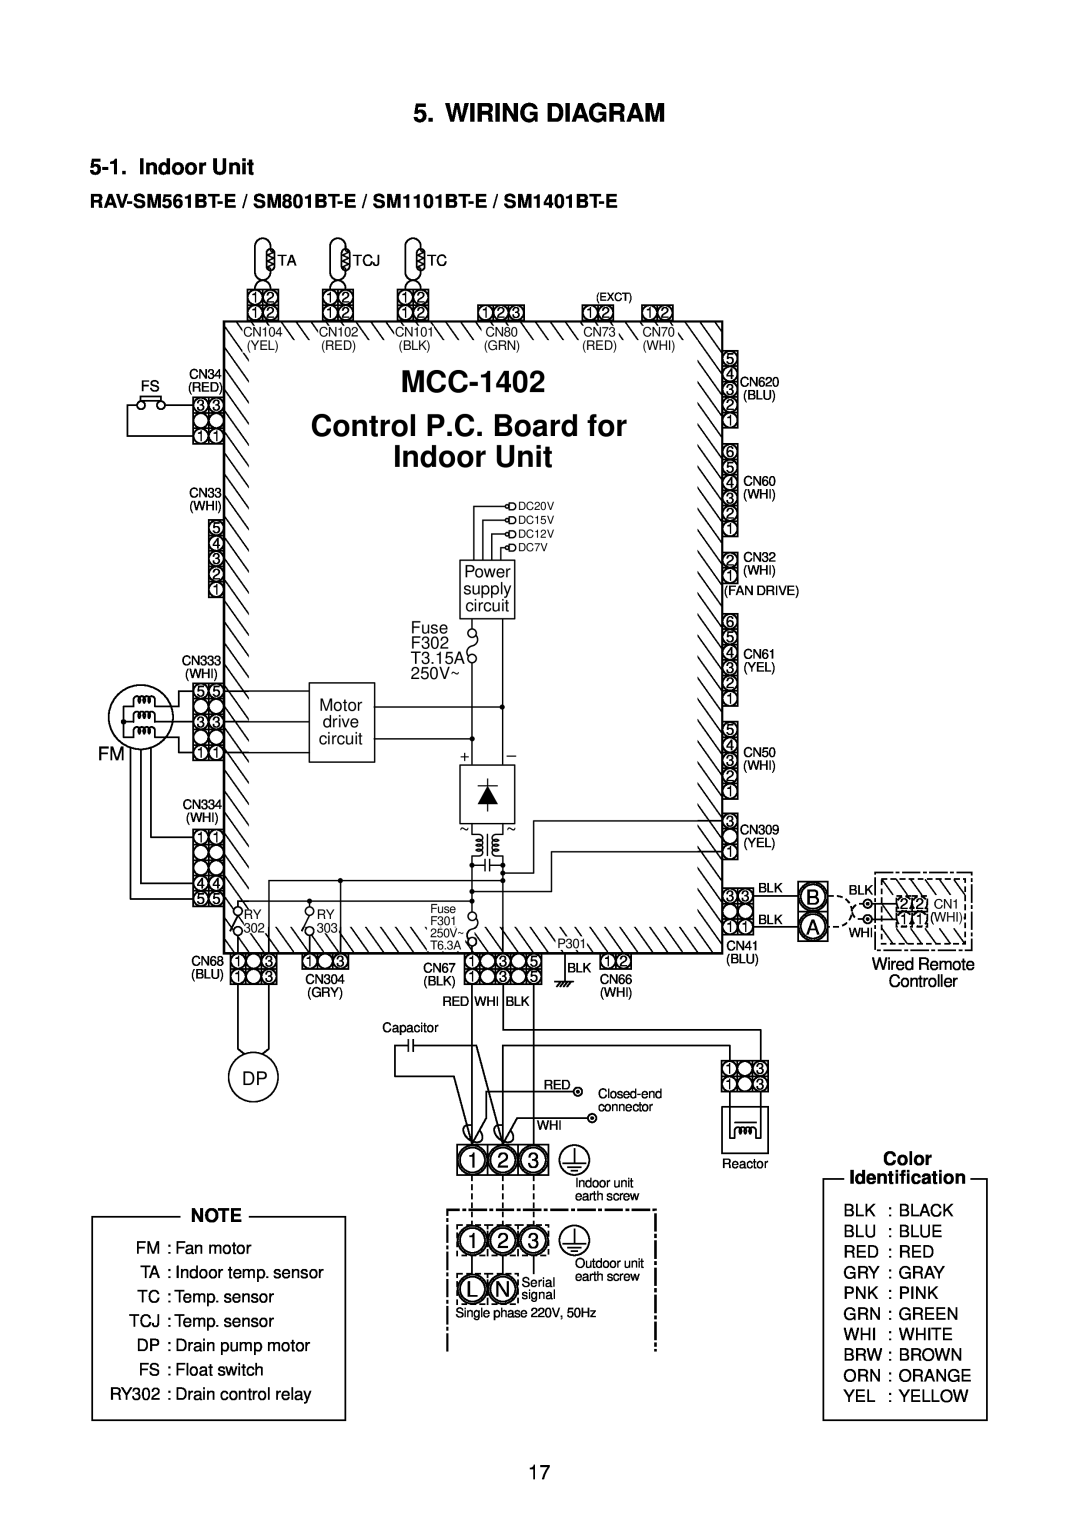 Toshiba RAV-SM1101BT-E, RAV-SM561BT-E Wiring Diagram, MCC-1402, Control P.C. Board for, Indoor Unit, Color, Identification 